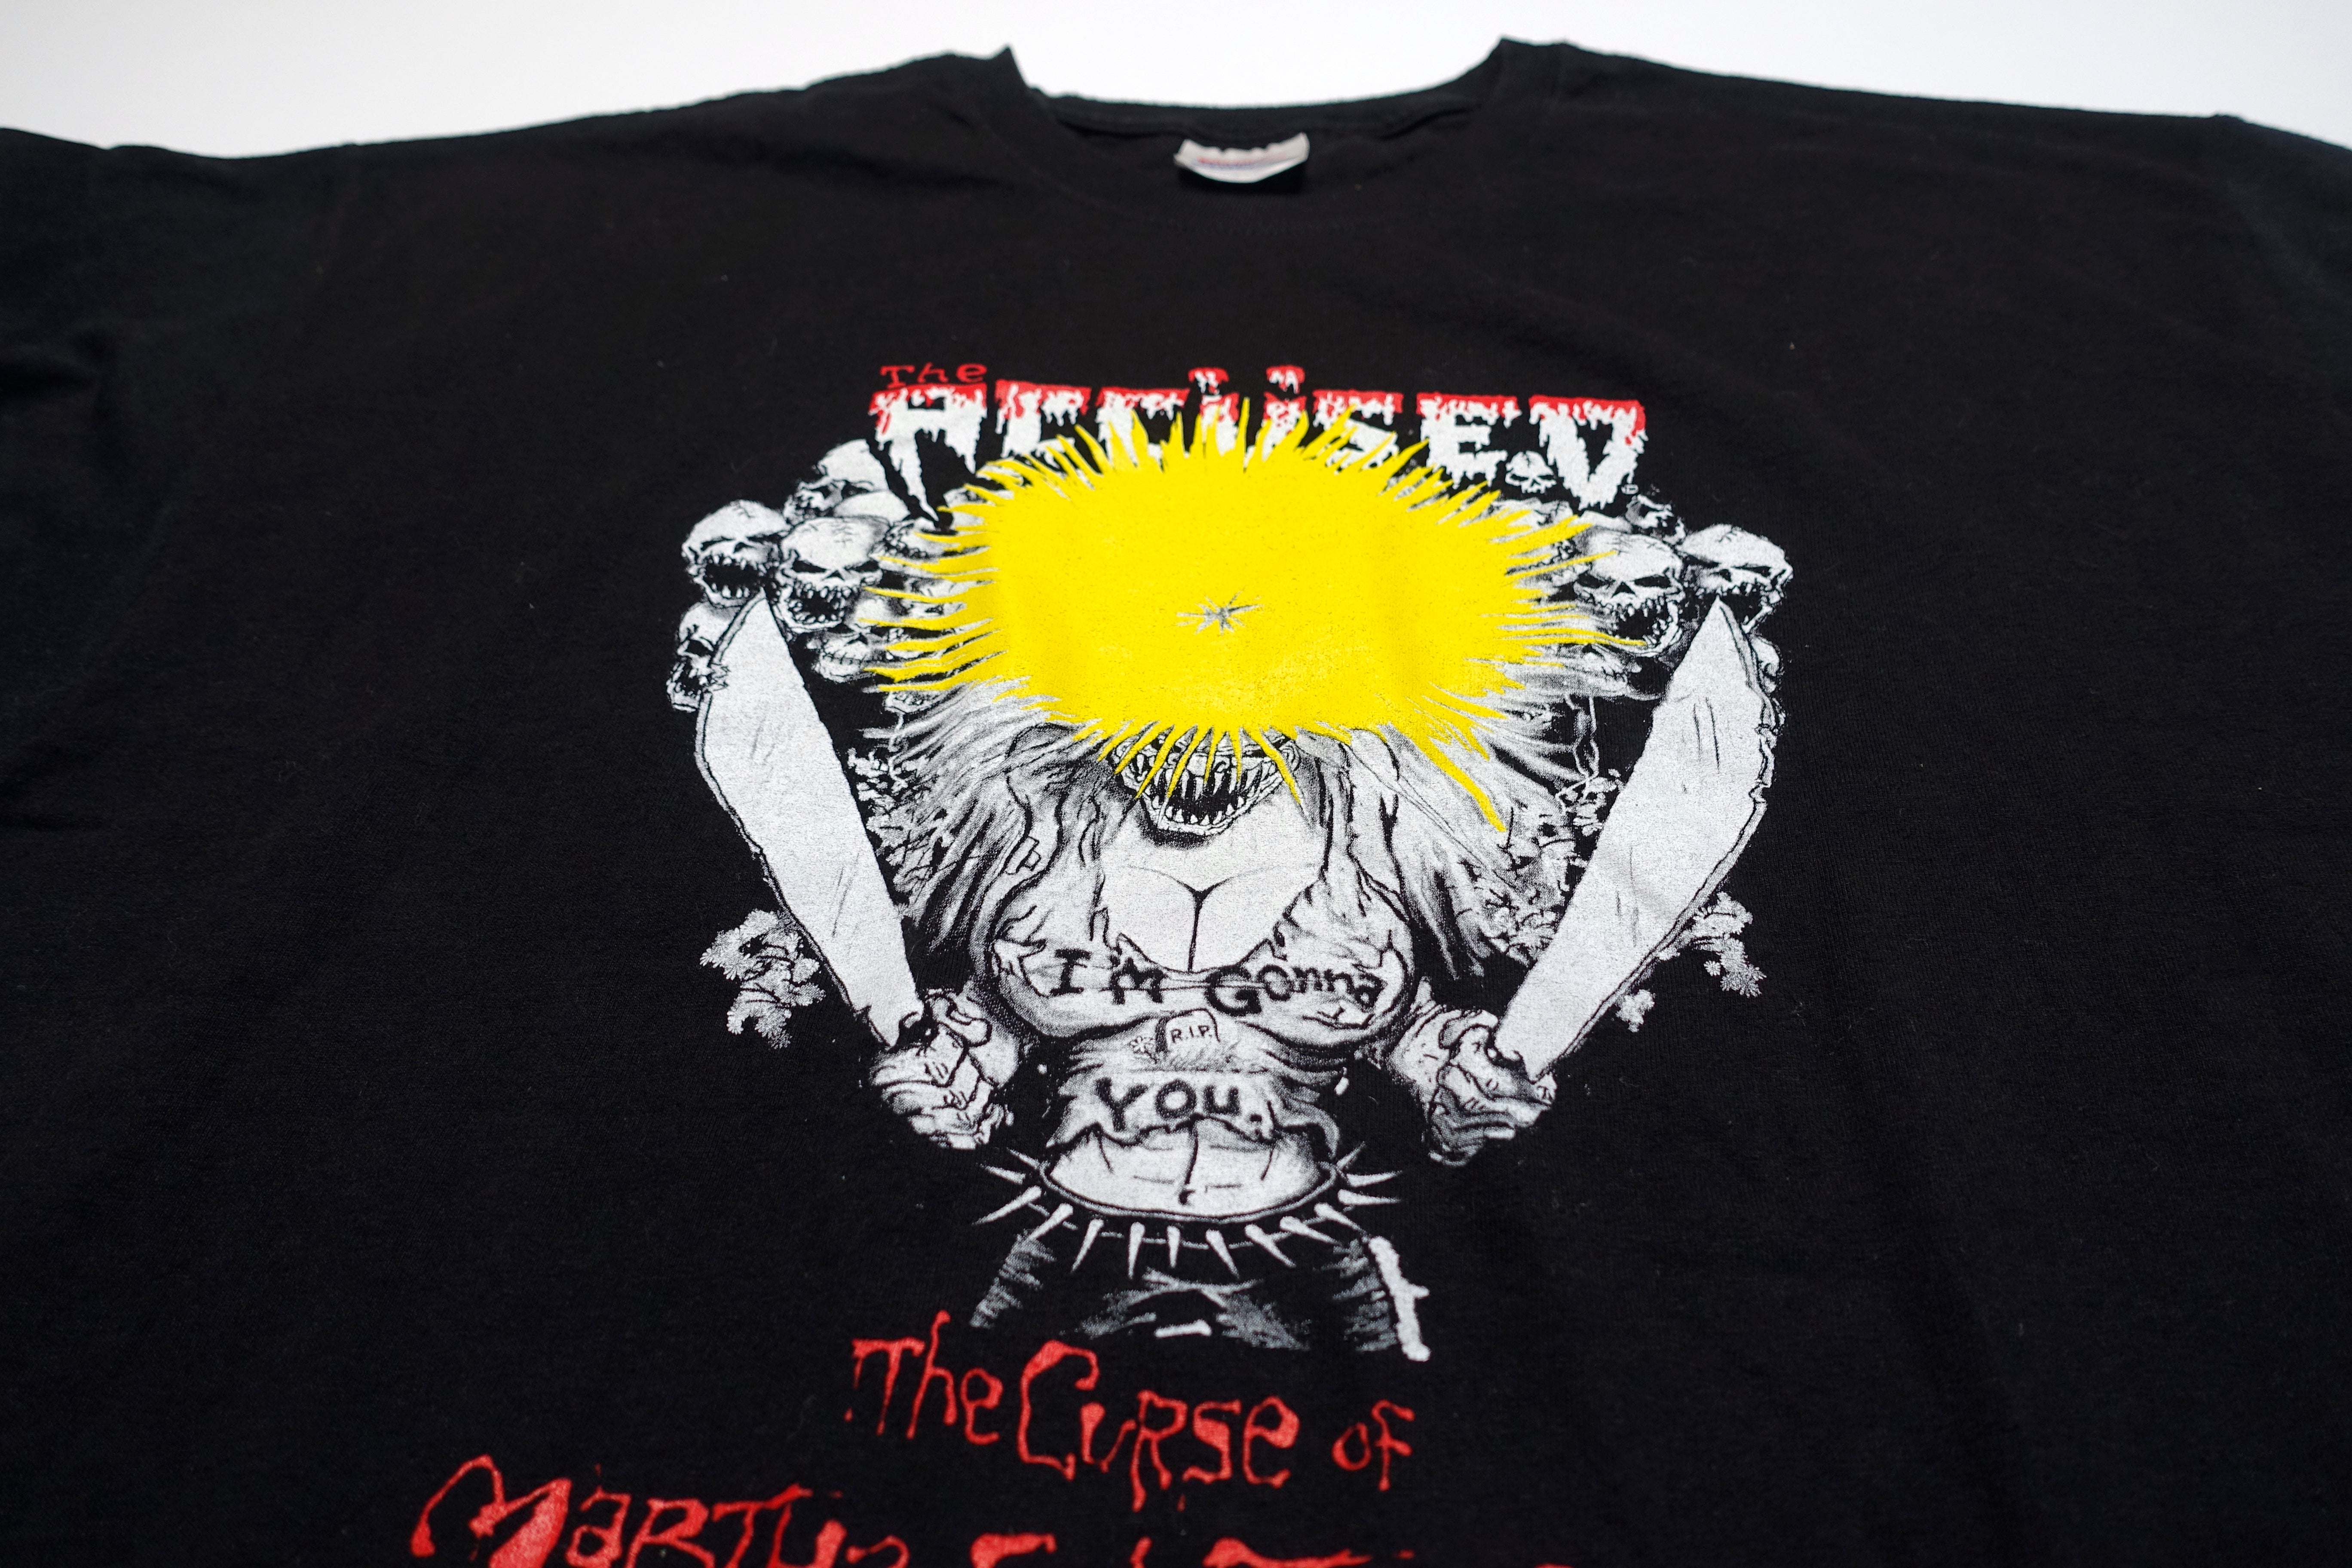 the Accüsed – the Curse Of Martha Splatterhead 2009 Tour Shirt Size XL